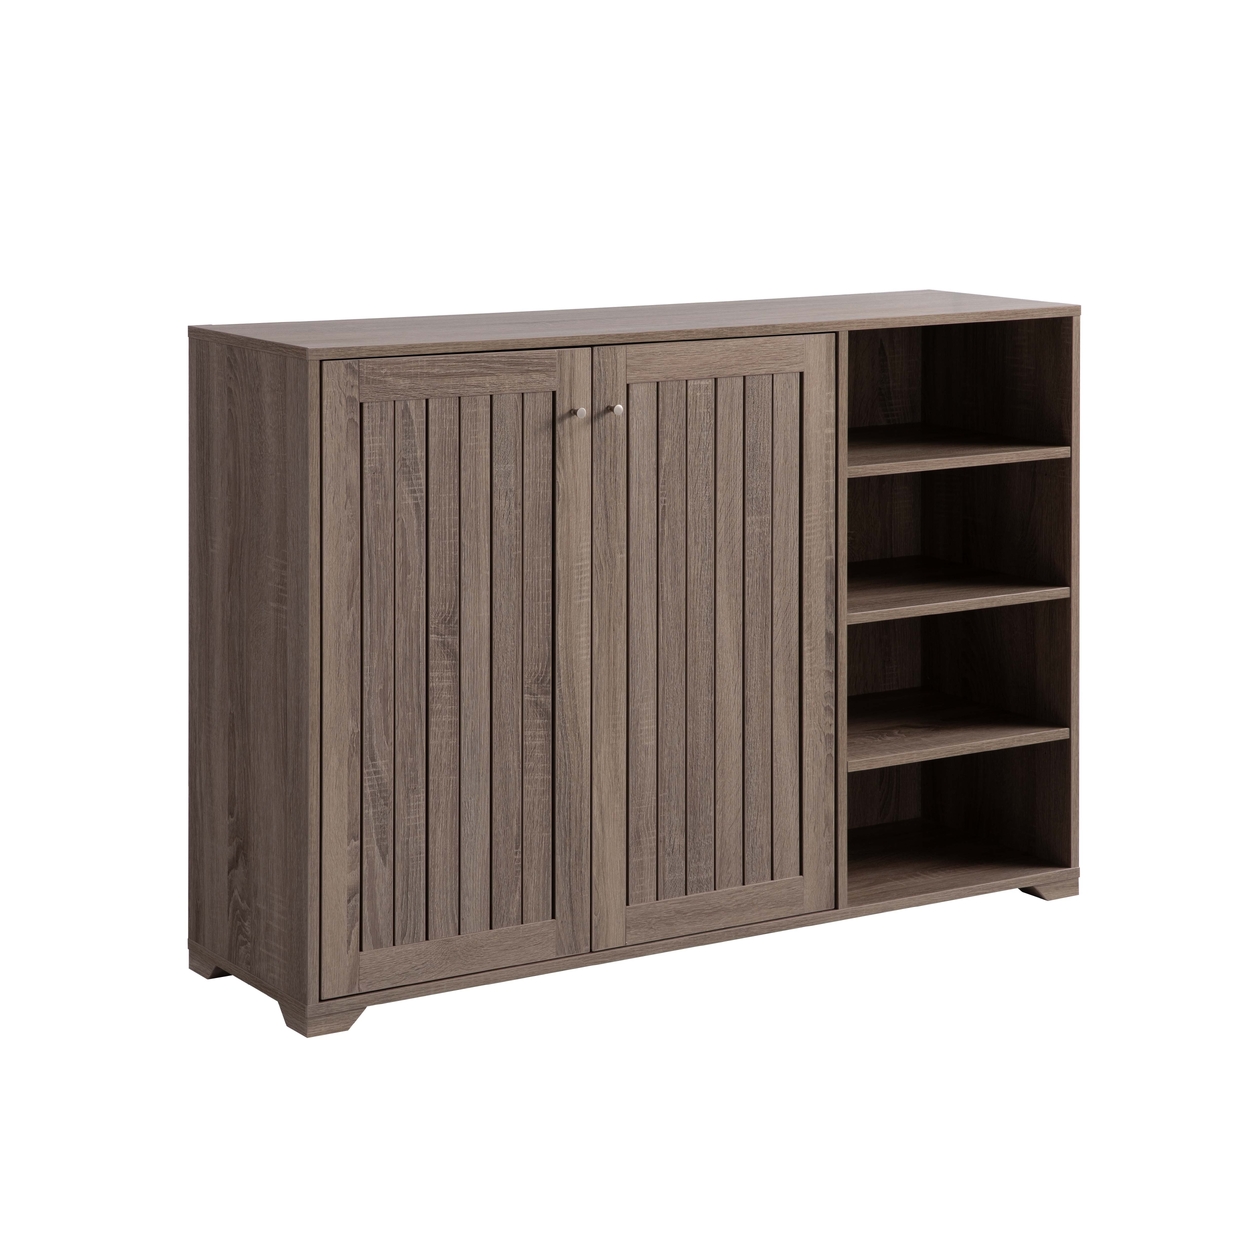 47 Inch Double Door Cabinet Console With 4 Open Shelves, Dark Taupe Brown- Saltoro Sherpi